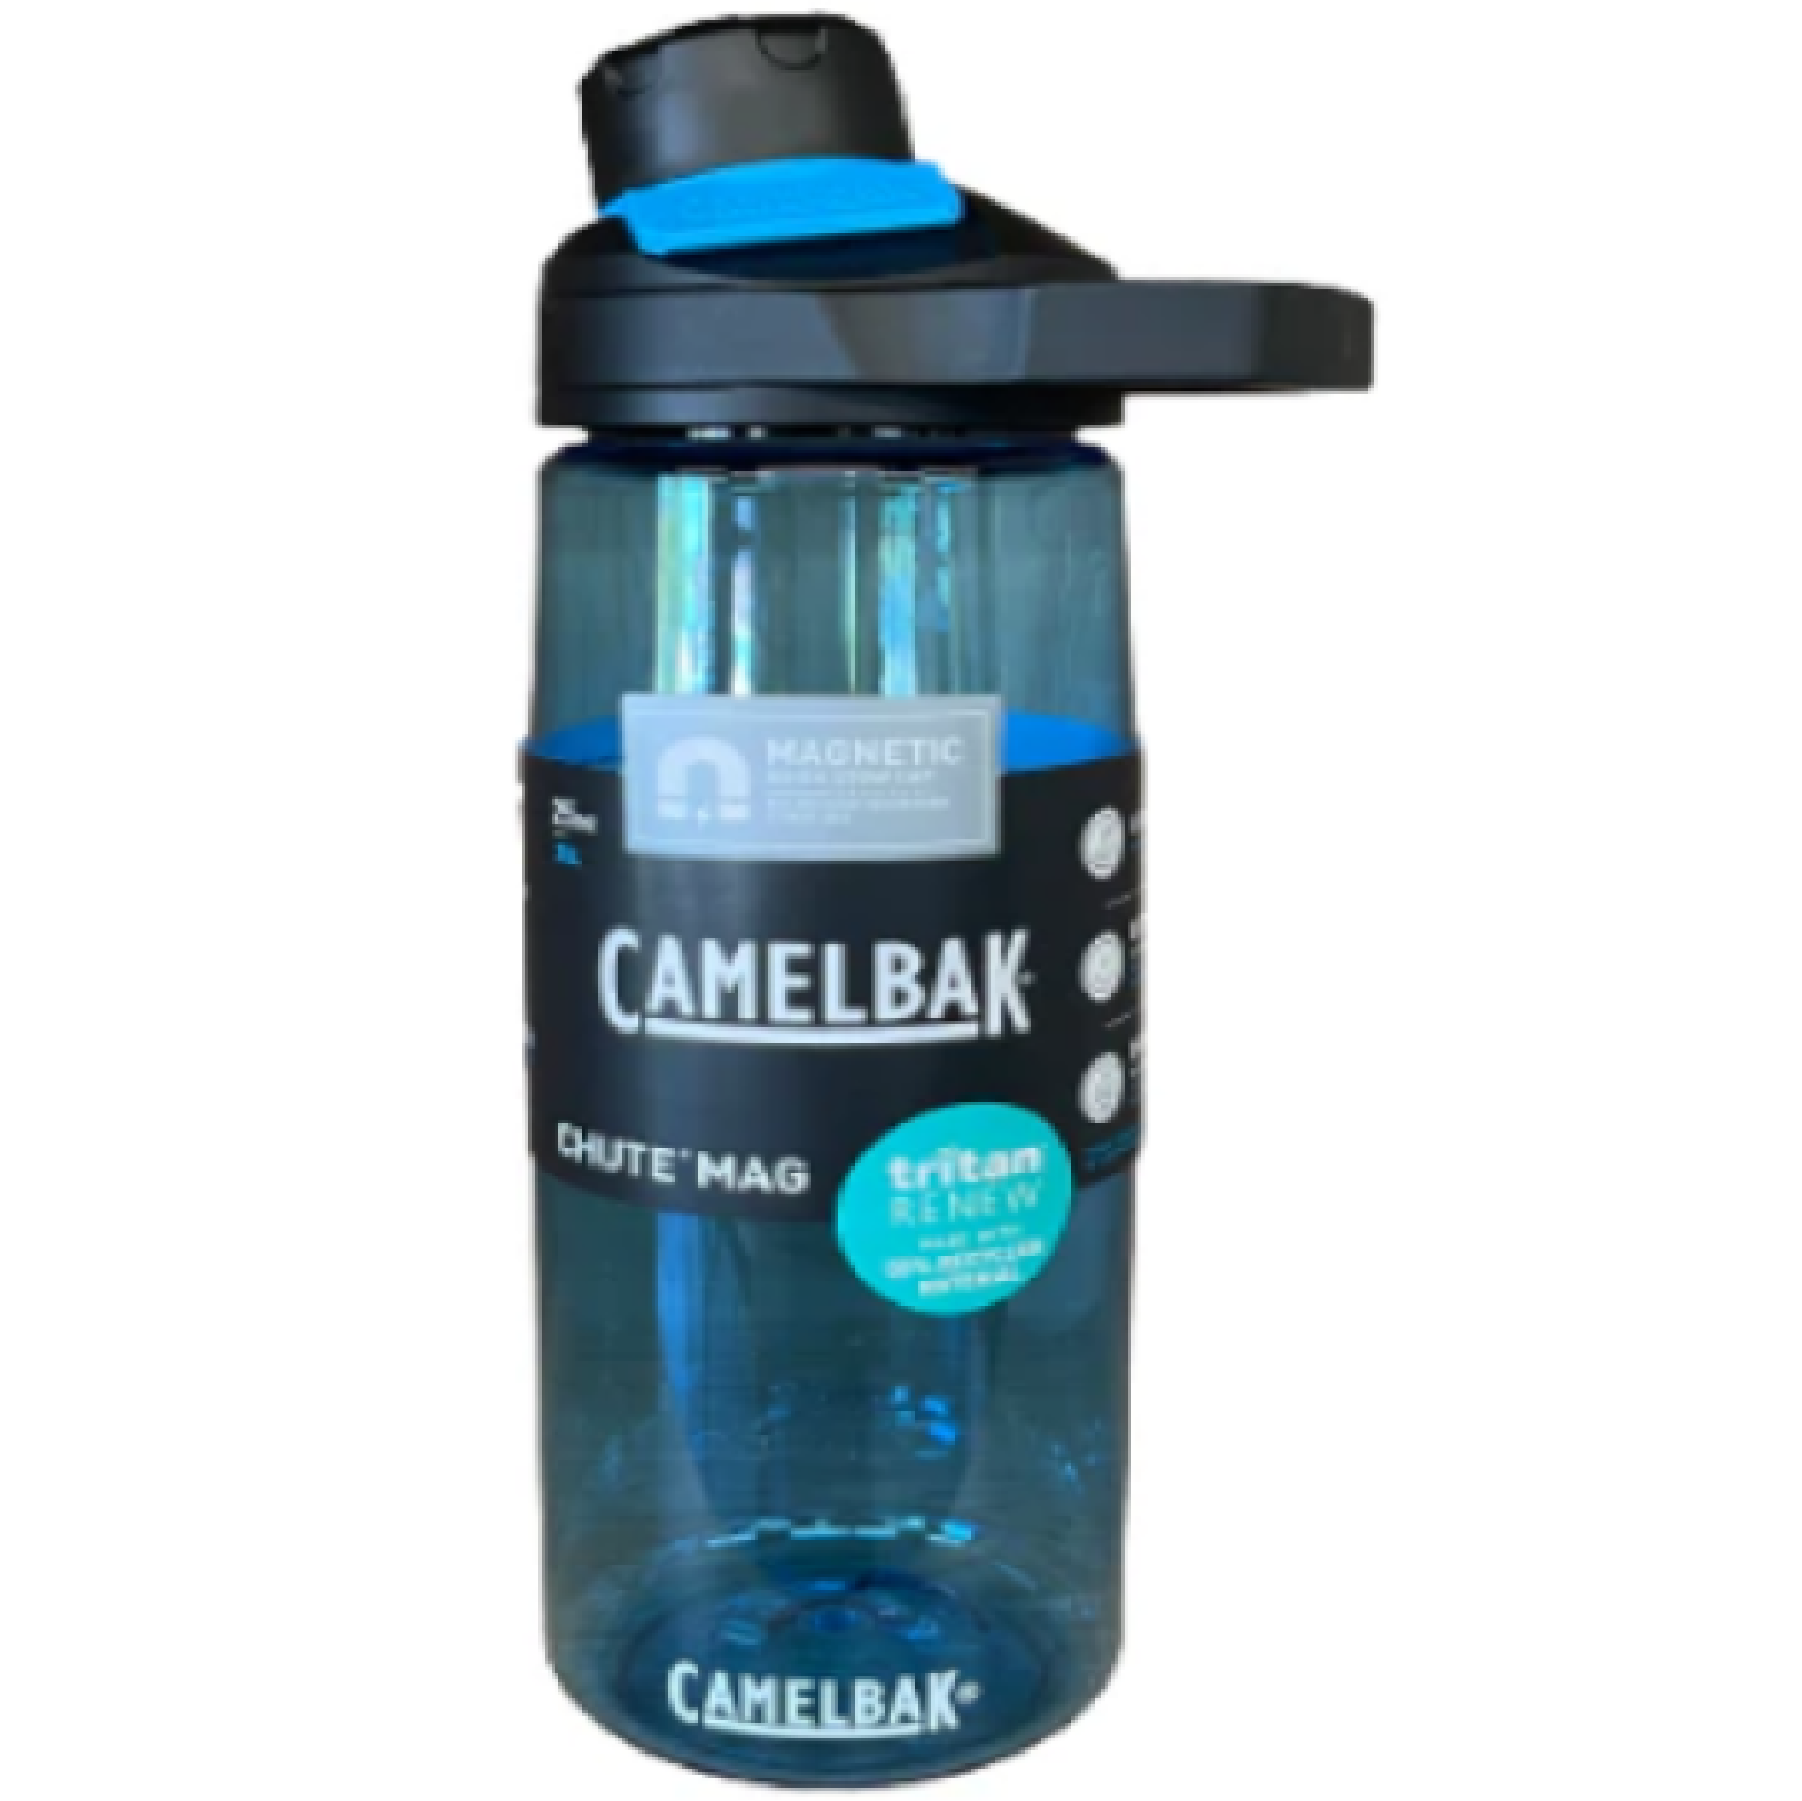 CAMELBAK CHUTE MAG Water Bottle 25 OZ TRUE BLUE